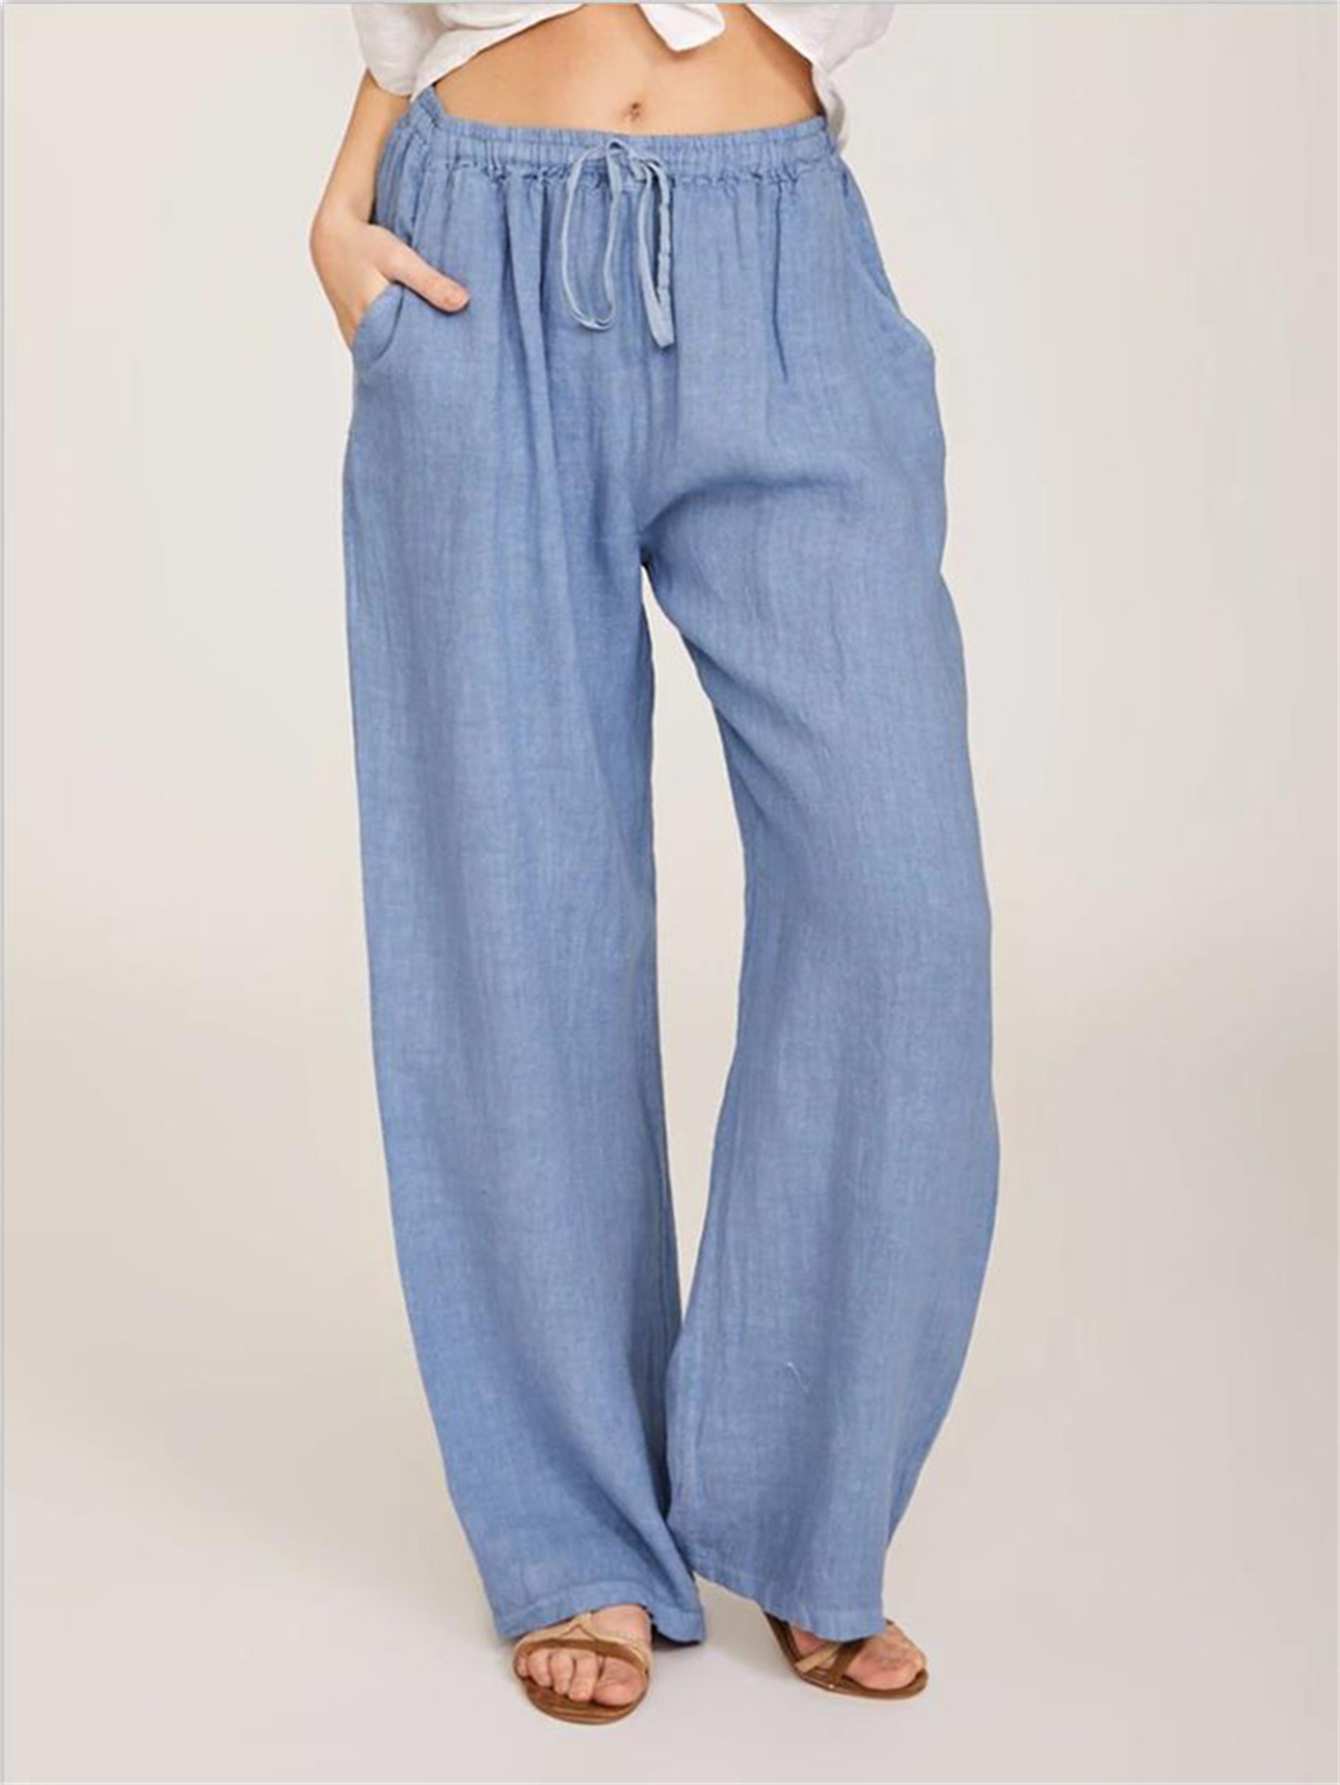 JNGSA Flowy Pants for Women Solid Color Baggy Pants Summer Slim Casual Loose  Trouser Wide Leg Pants Light Blue 10 